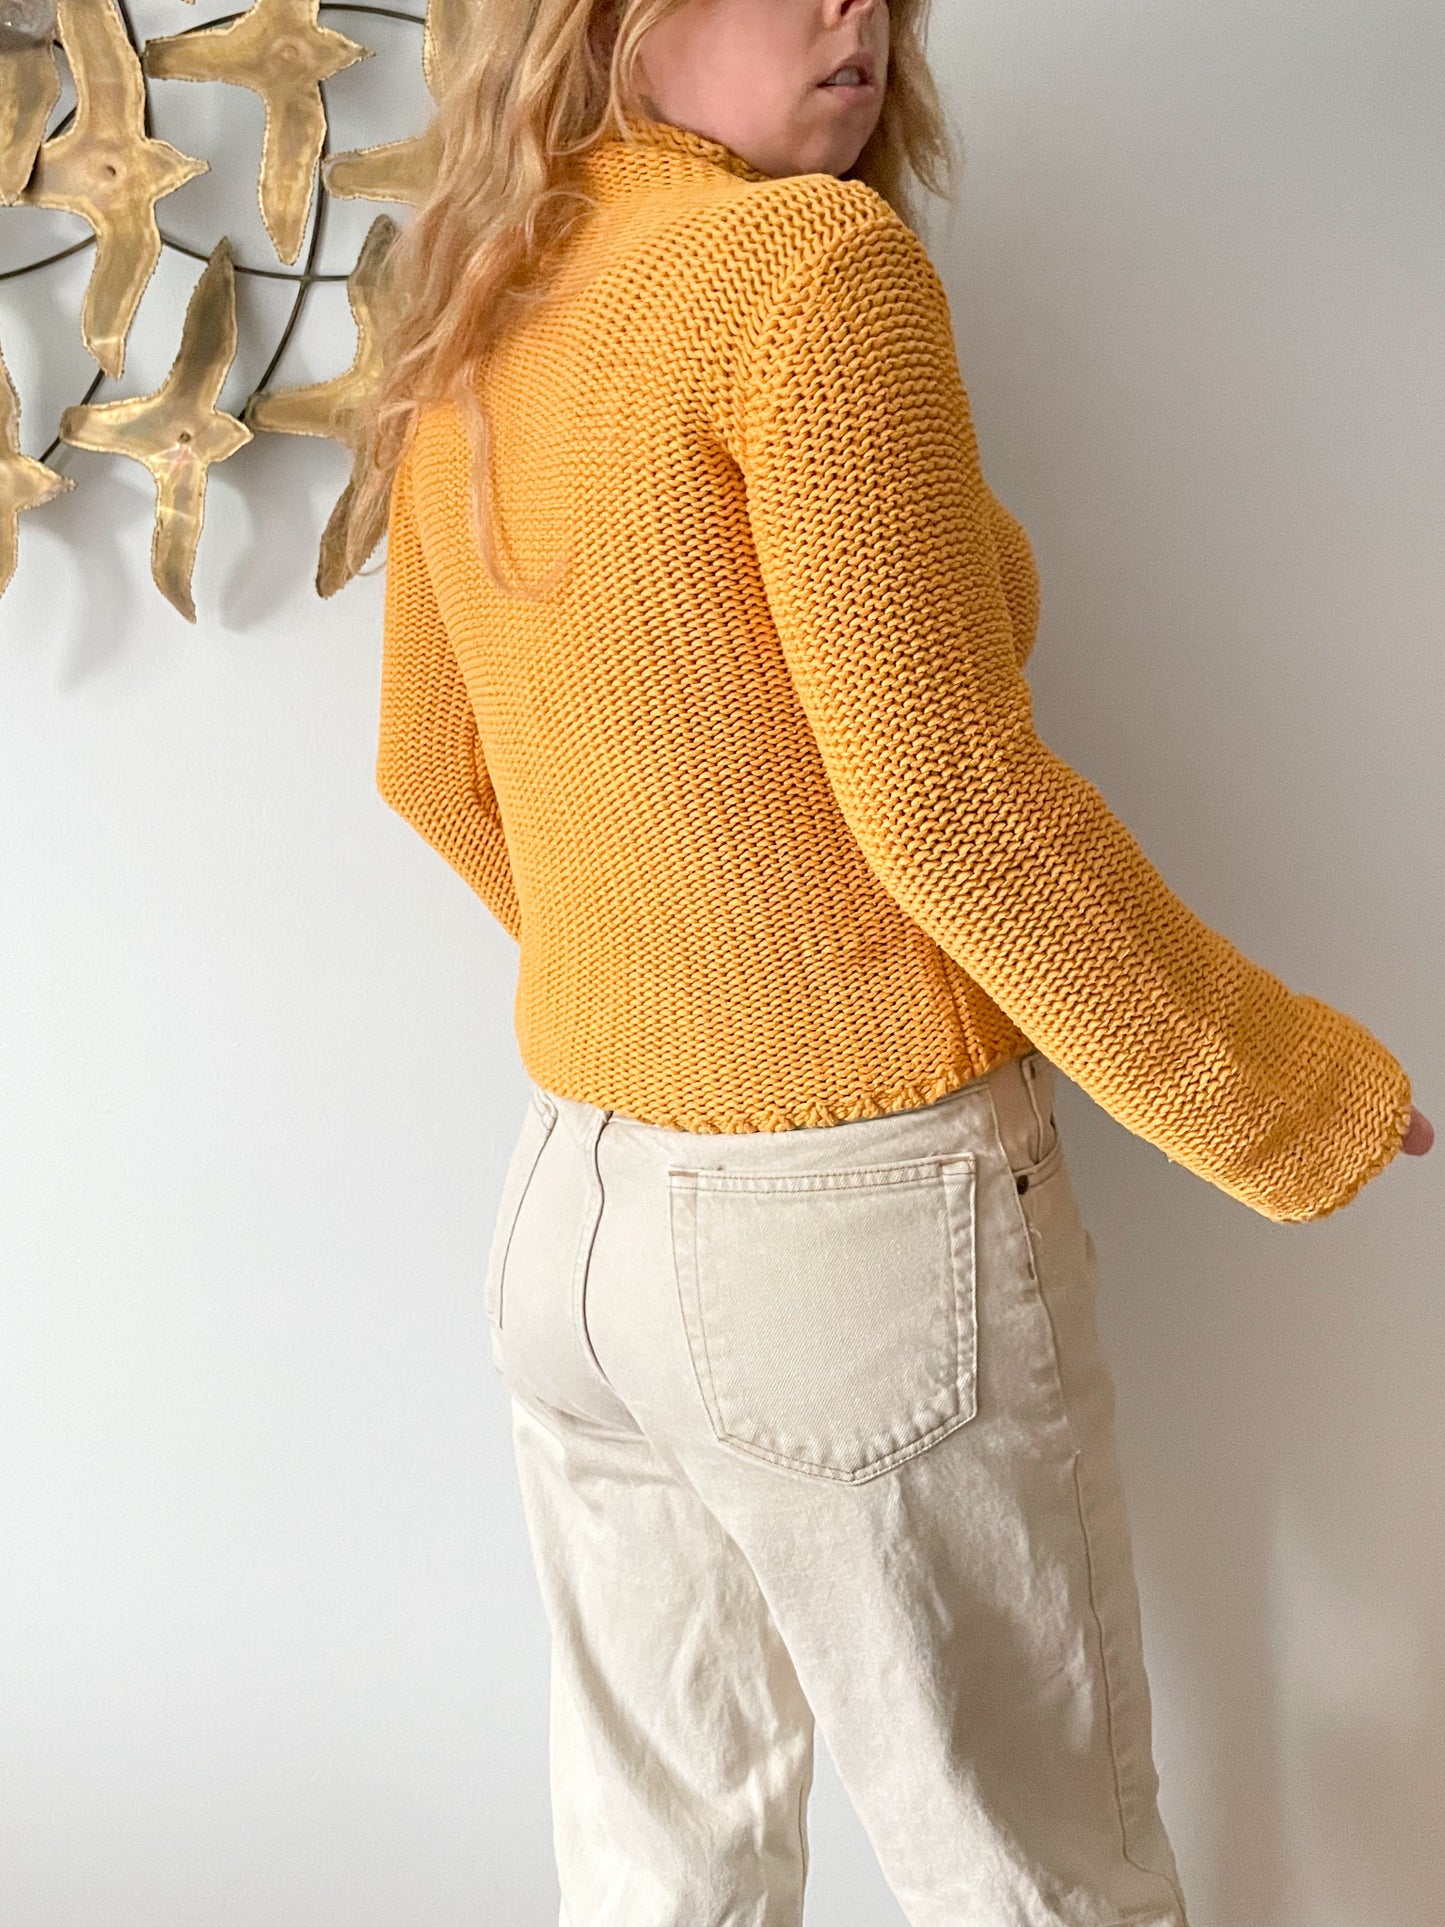 Vintage Holt Renfrew Yellow Knit 100% Cotton Turtleneck Sweater - S/M